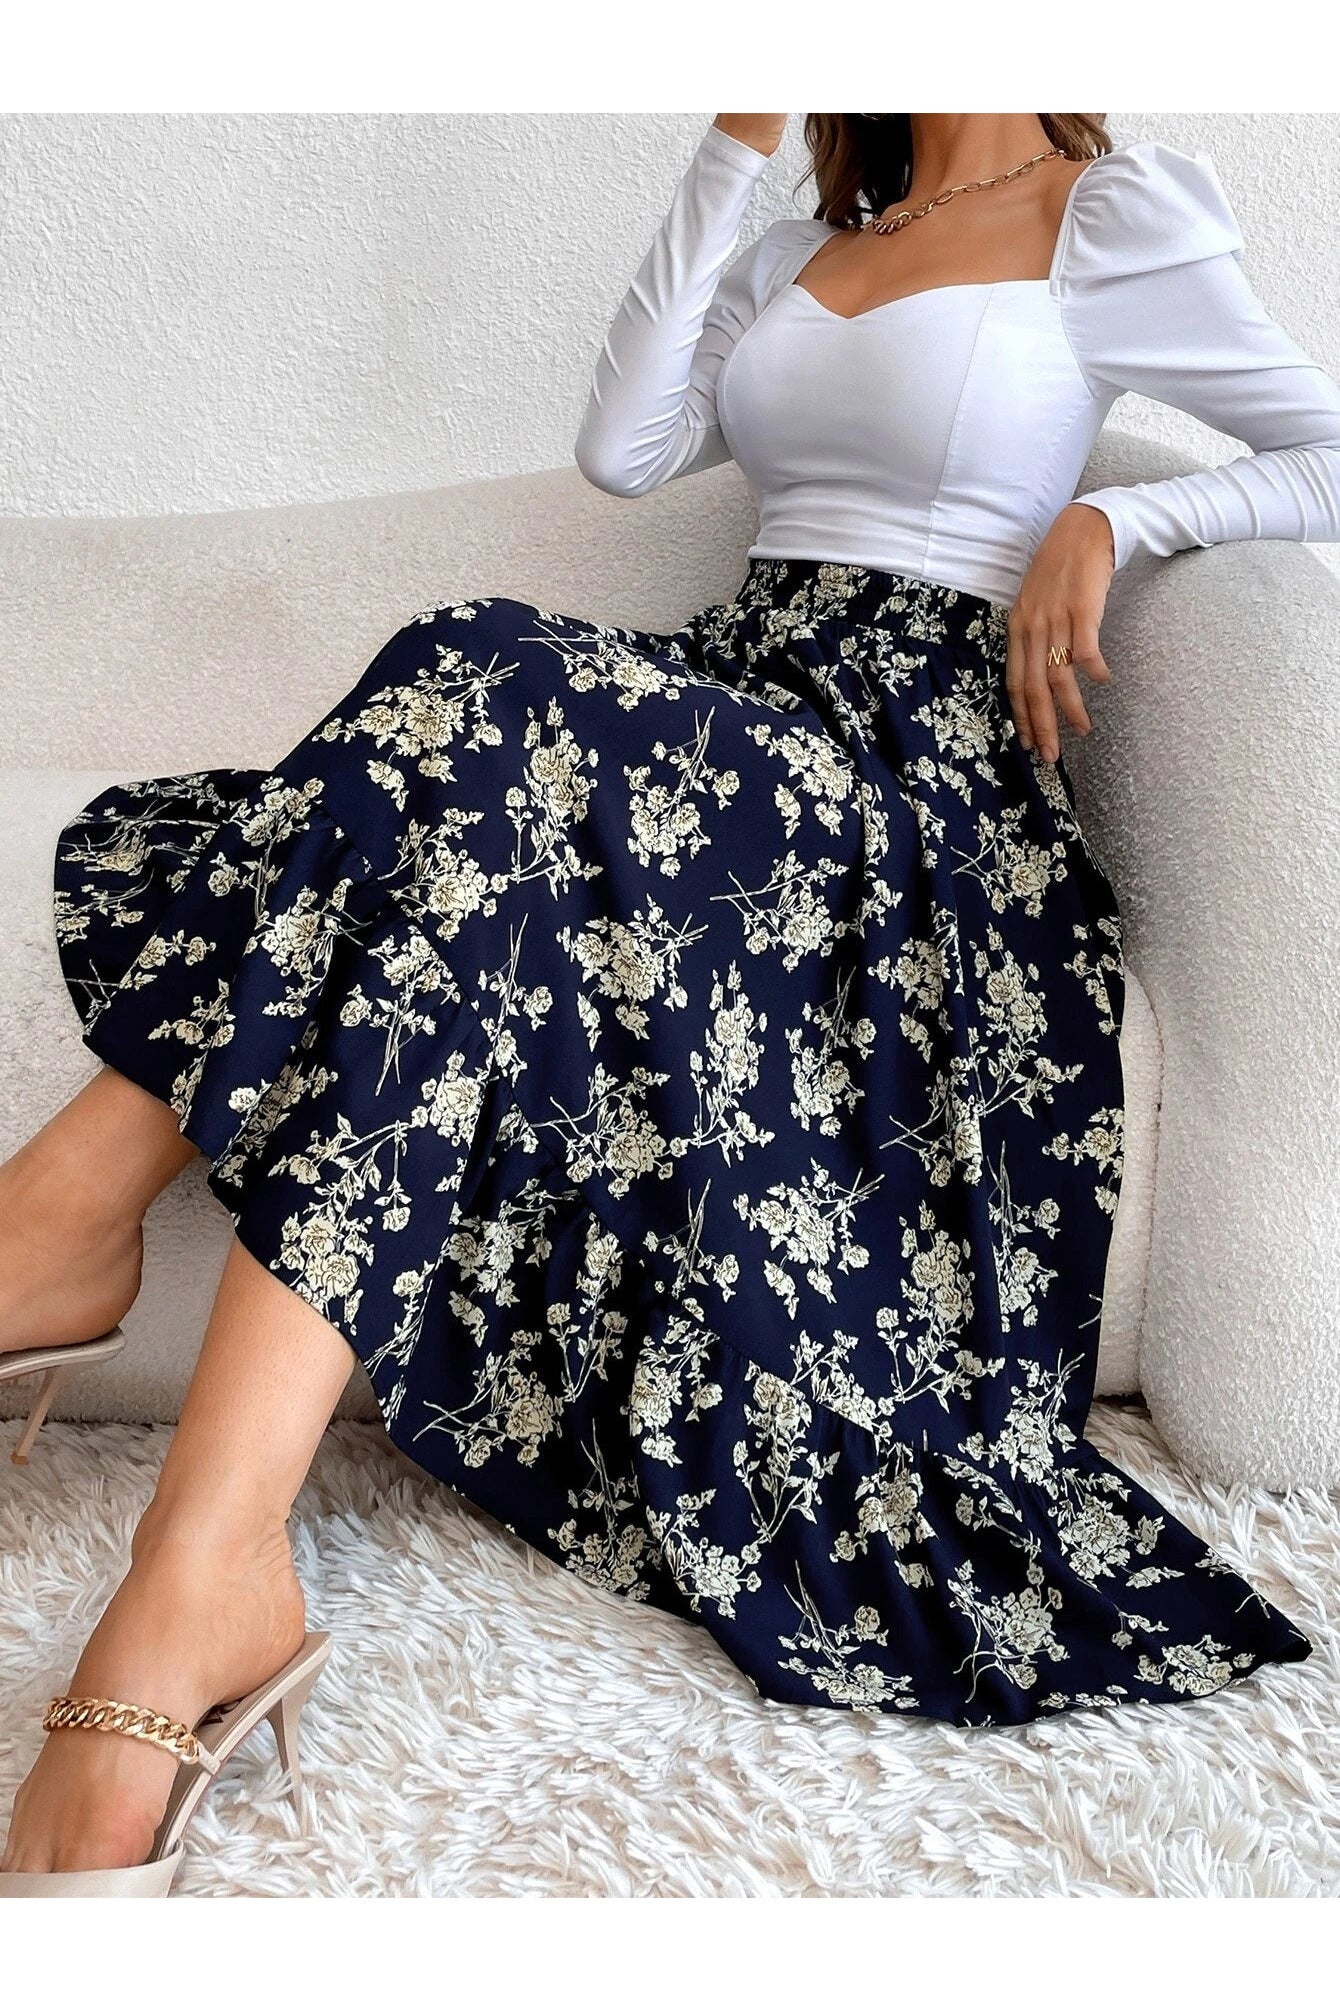 Buy Shein Allover Floral Print Ruffle Hem Skirt - Small in Pakistan